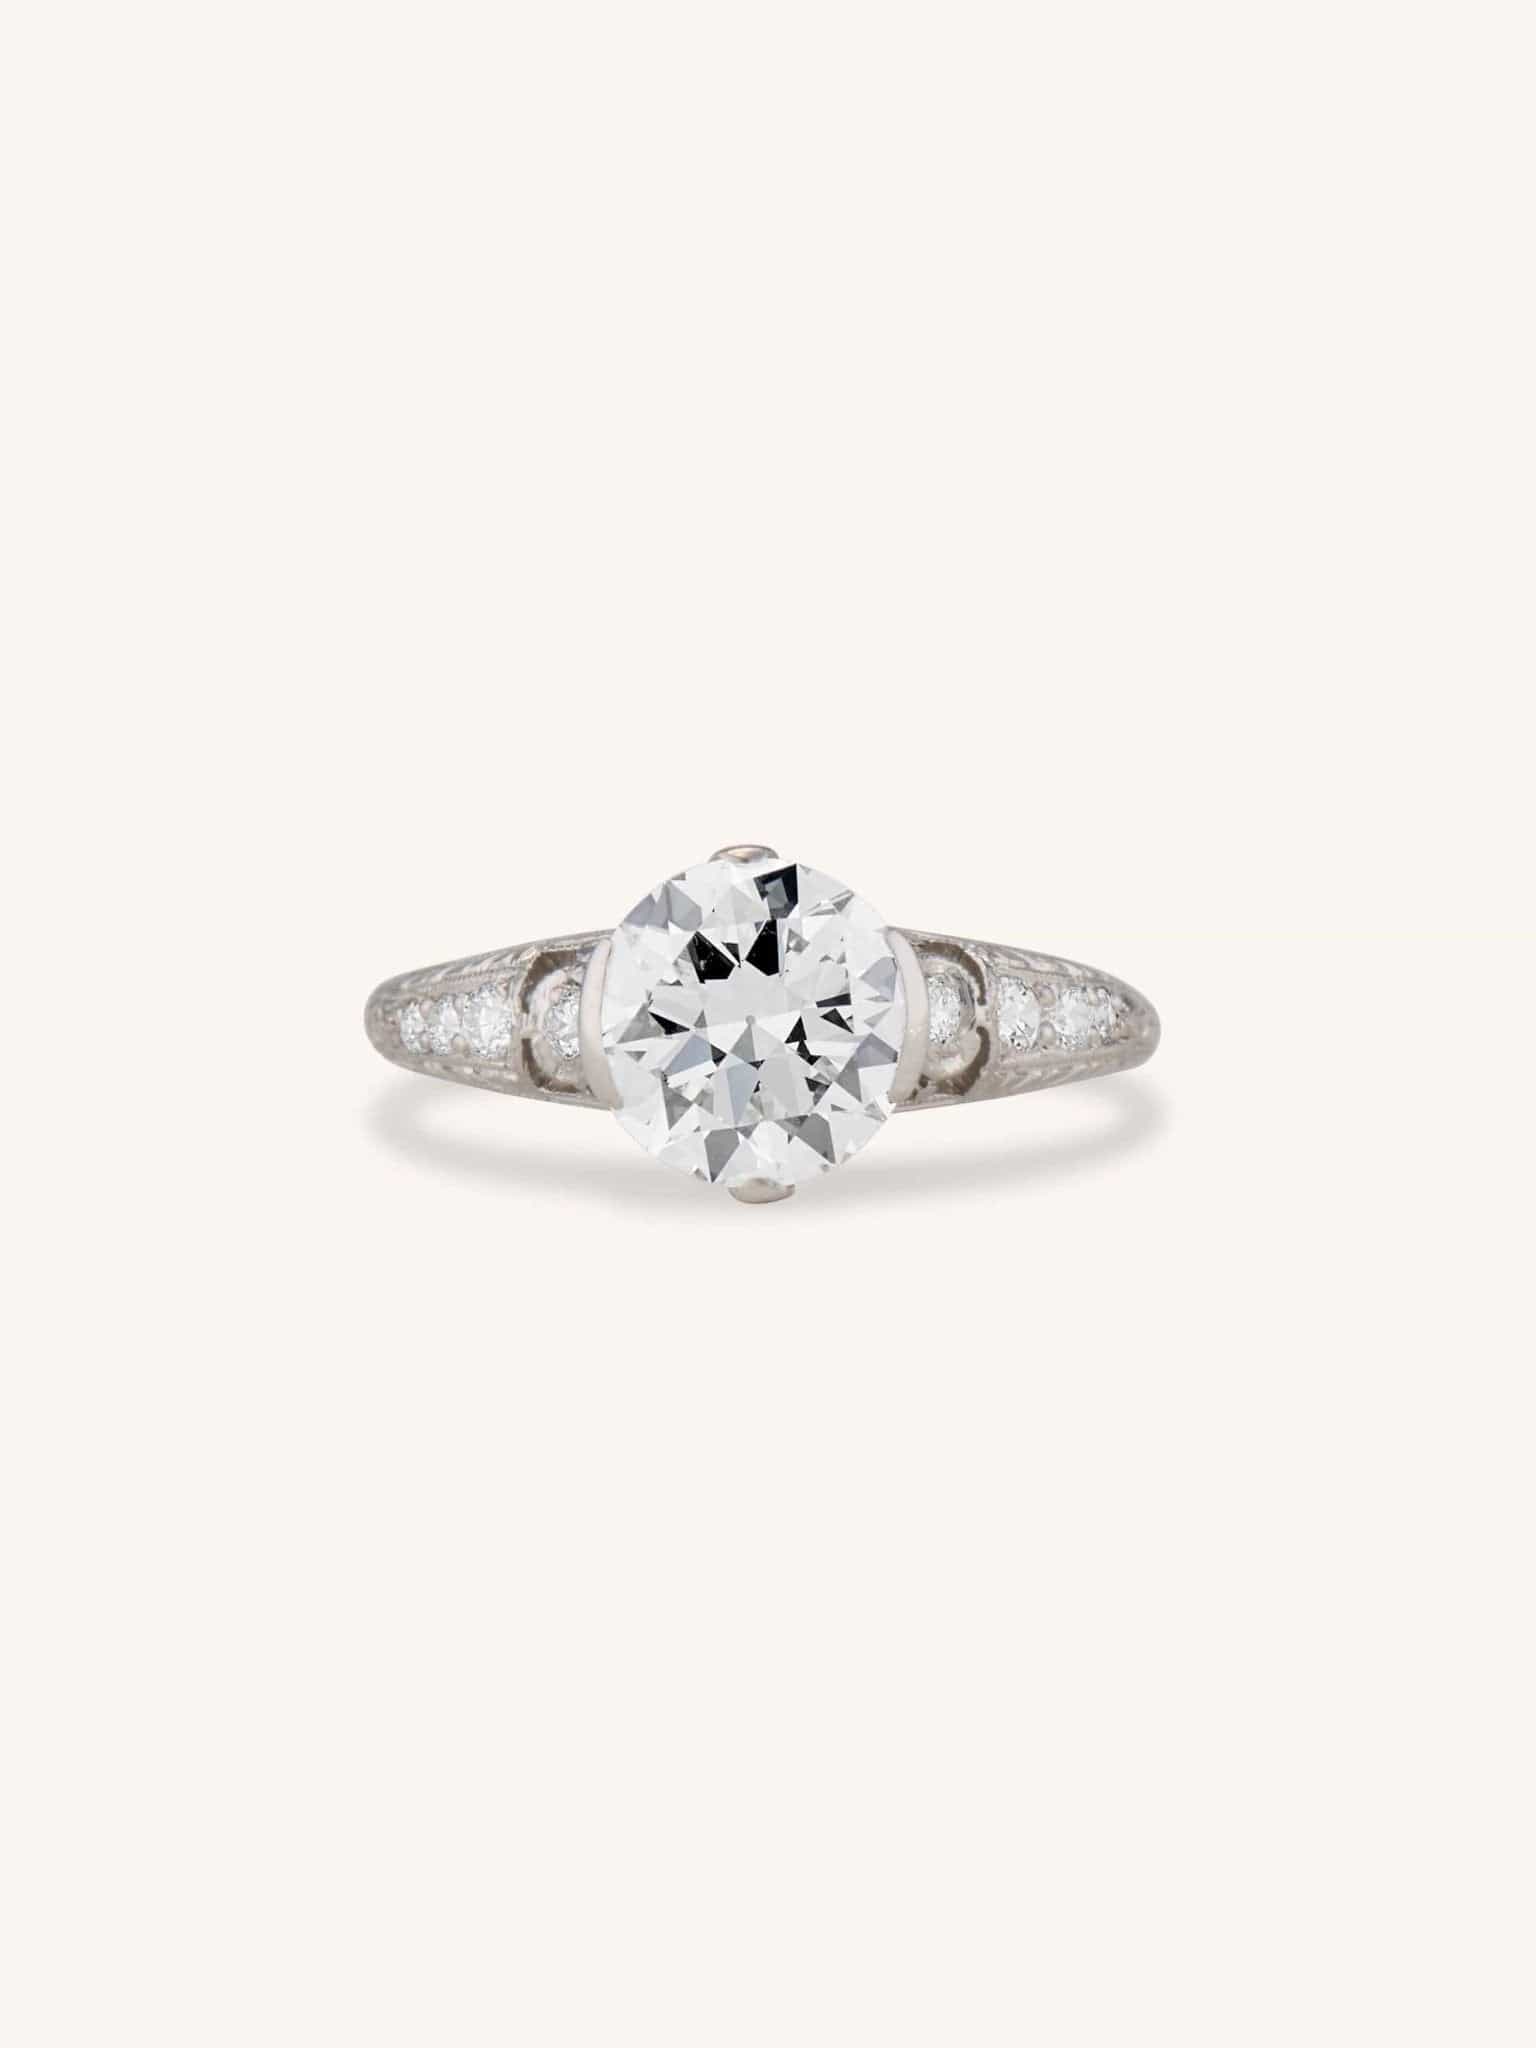 Tiffany & Co. Art Deco 1.64 Carat Round Diamond Engagement Ring